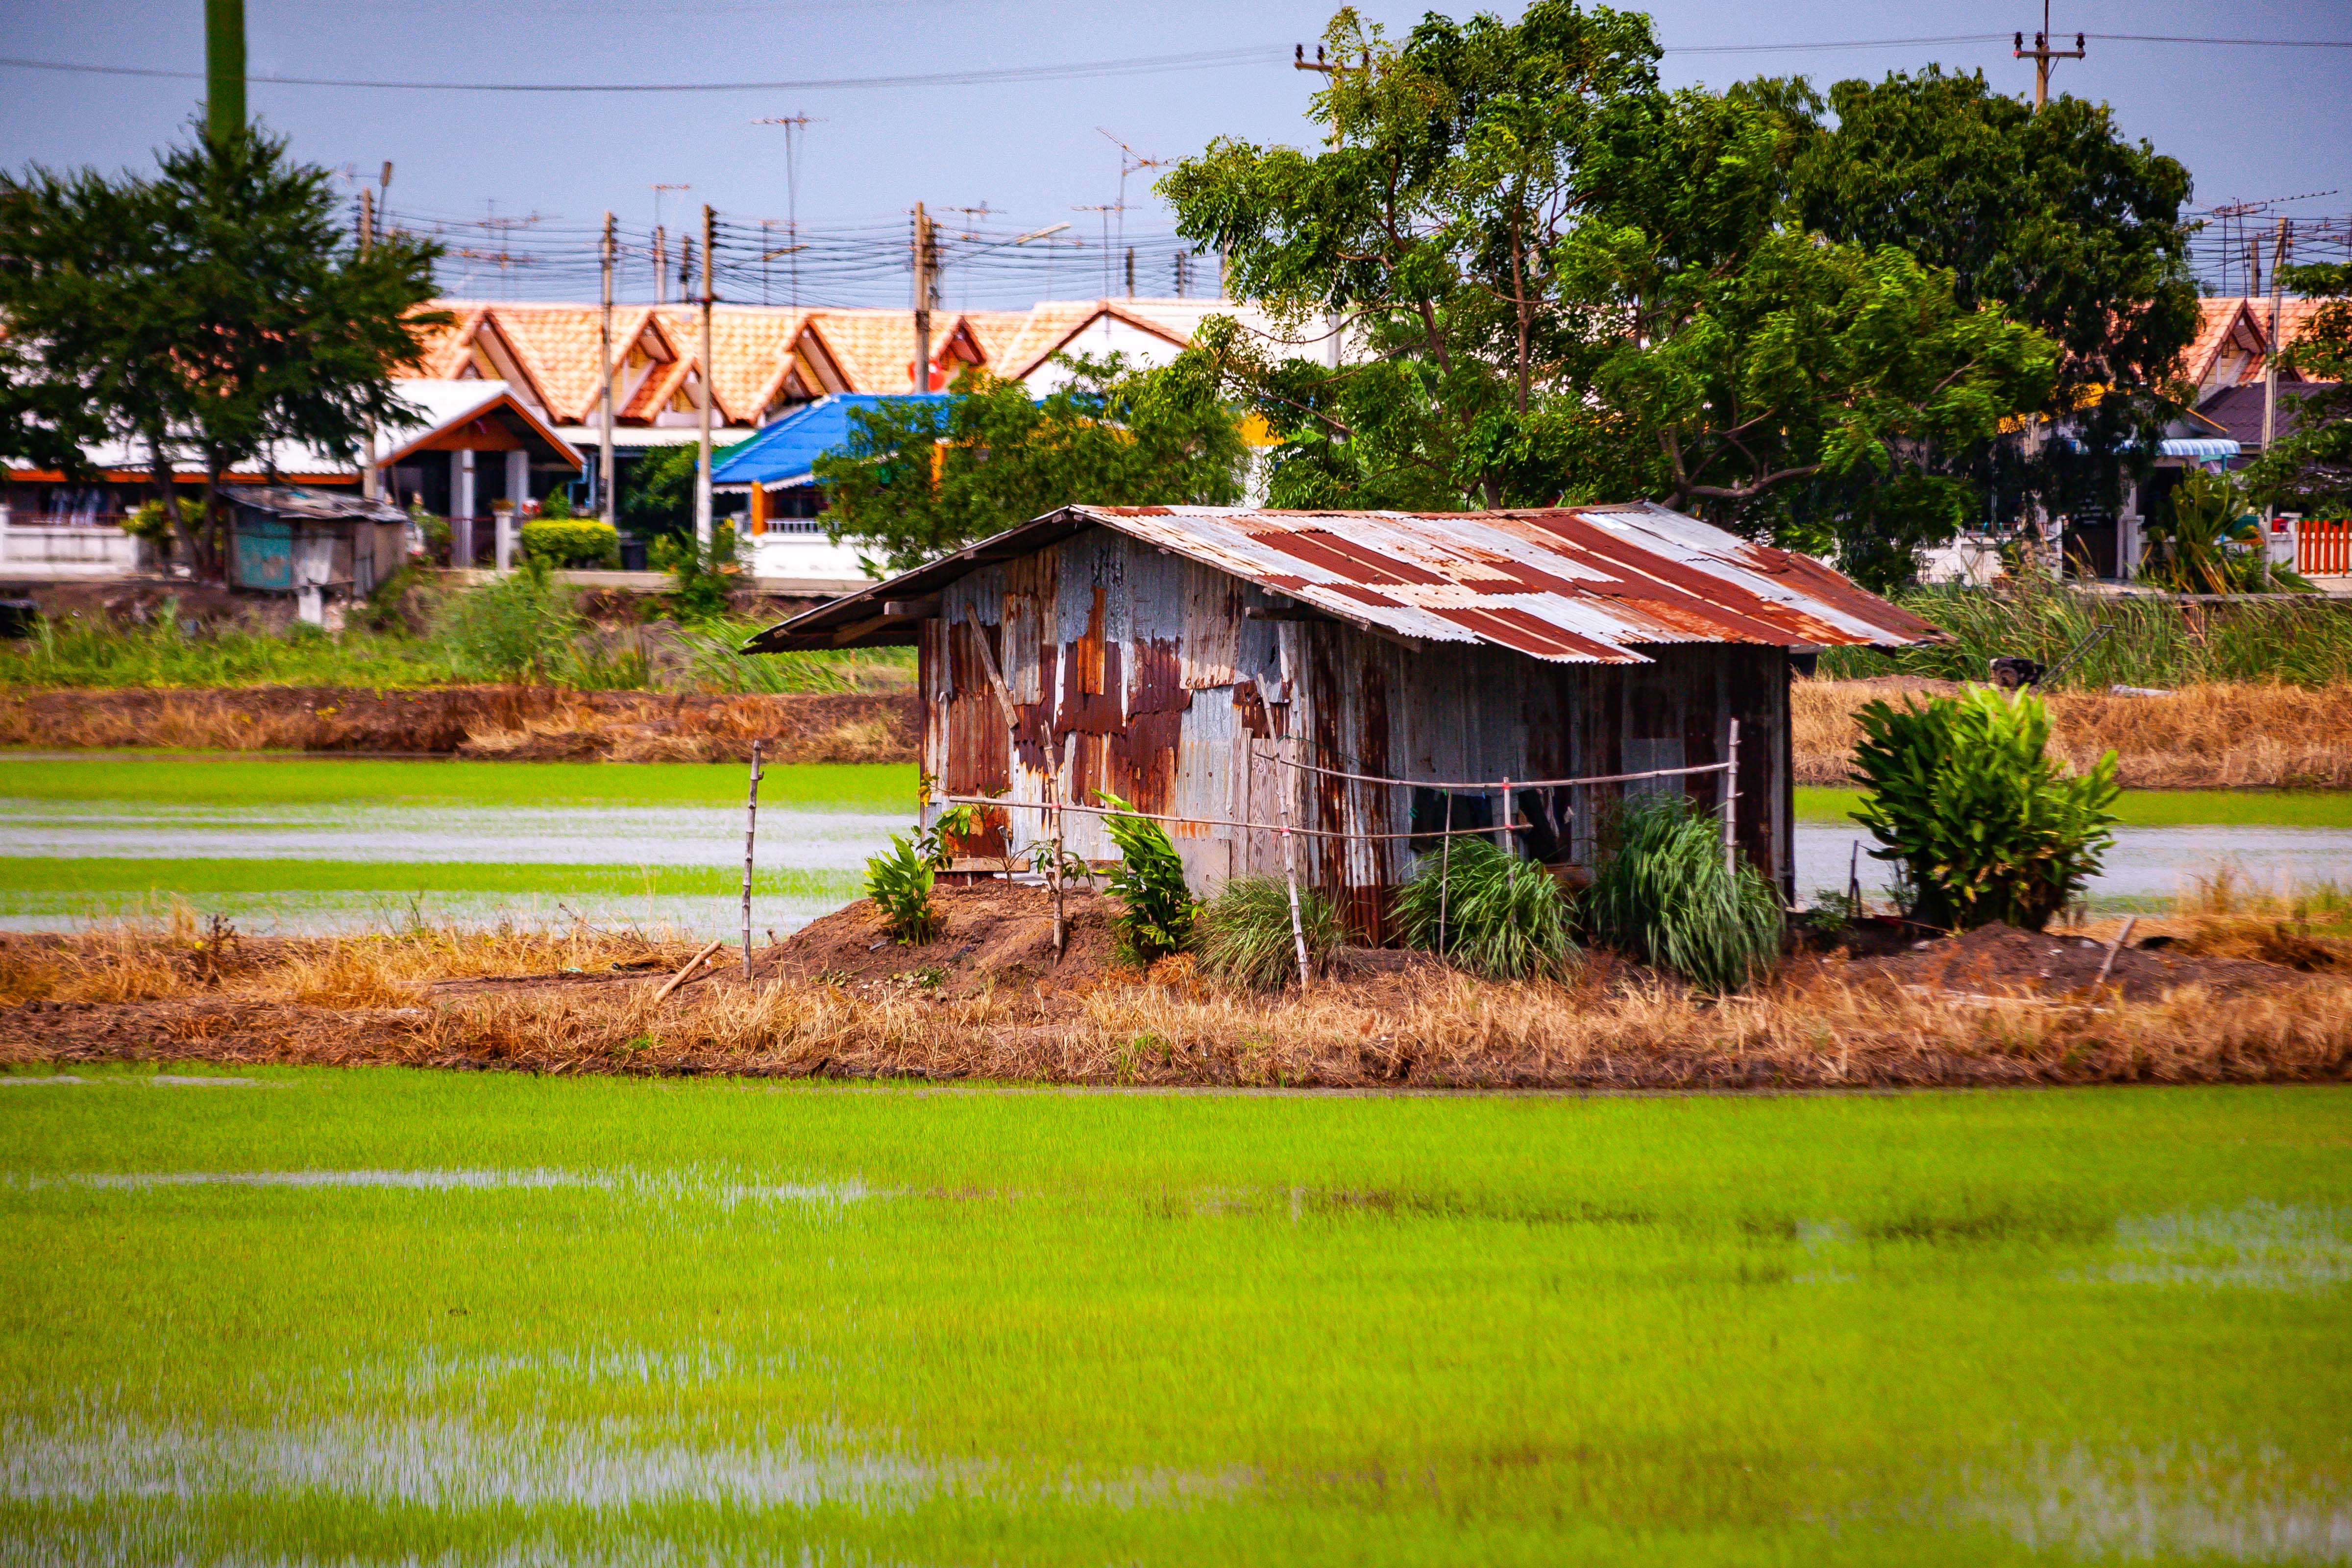 Thailand, Phra Nakhon Si Ayutthaya Prov, Rice Field House In City, 2008, IMG 4346